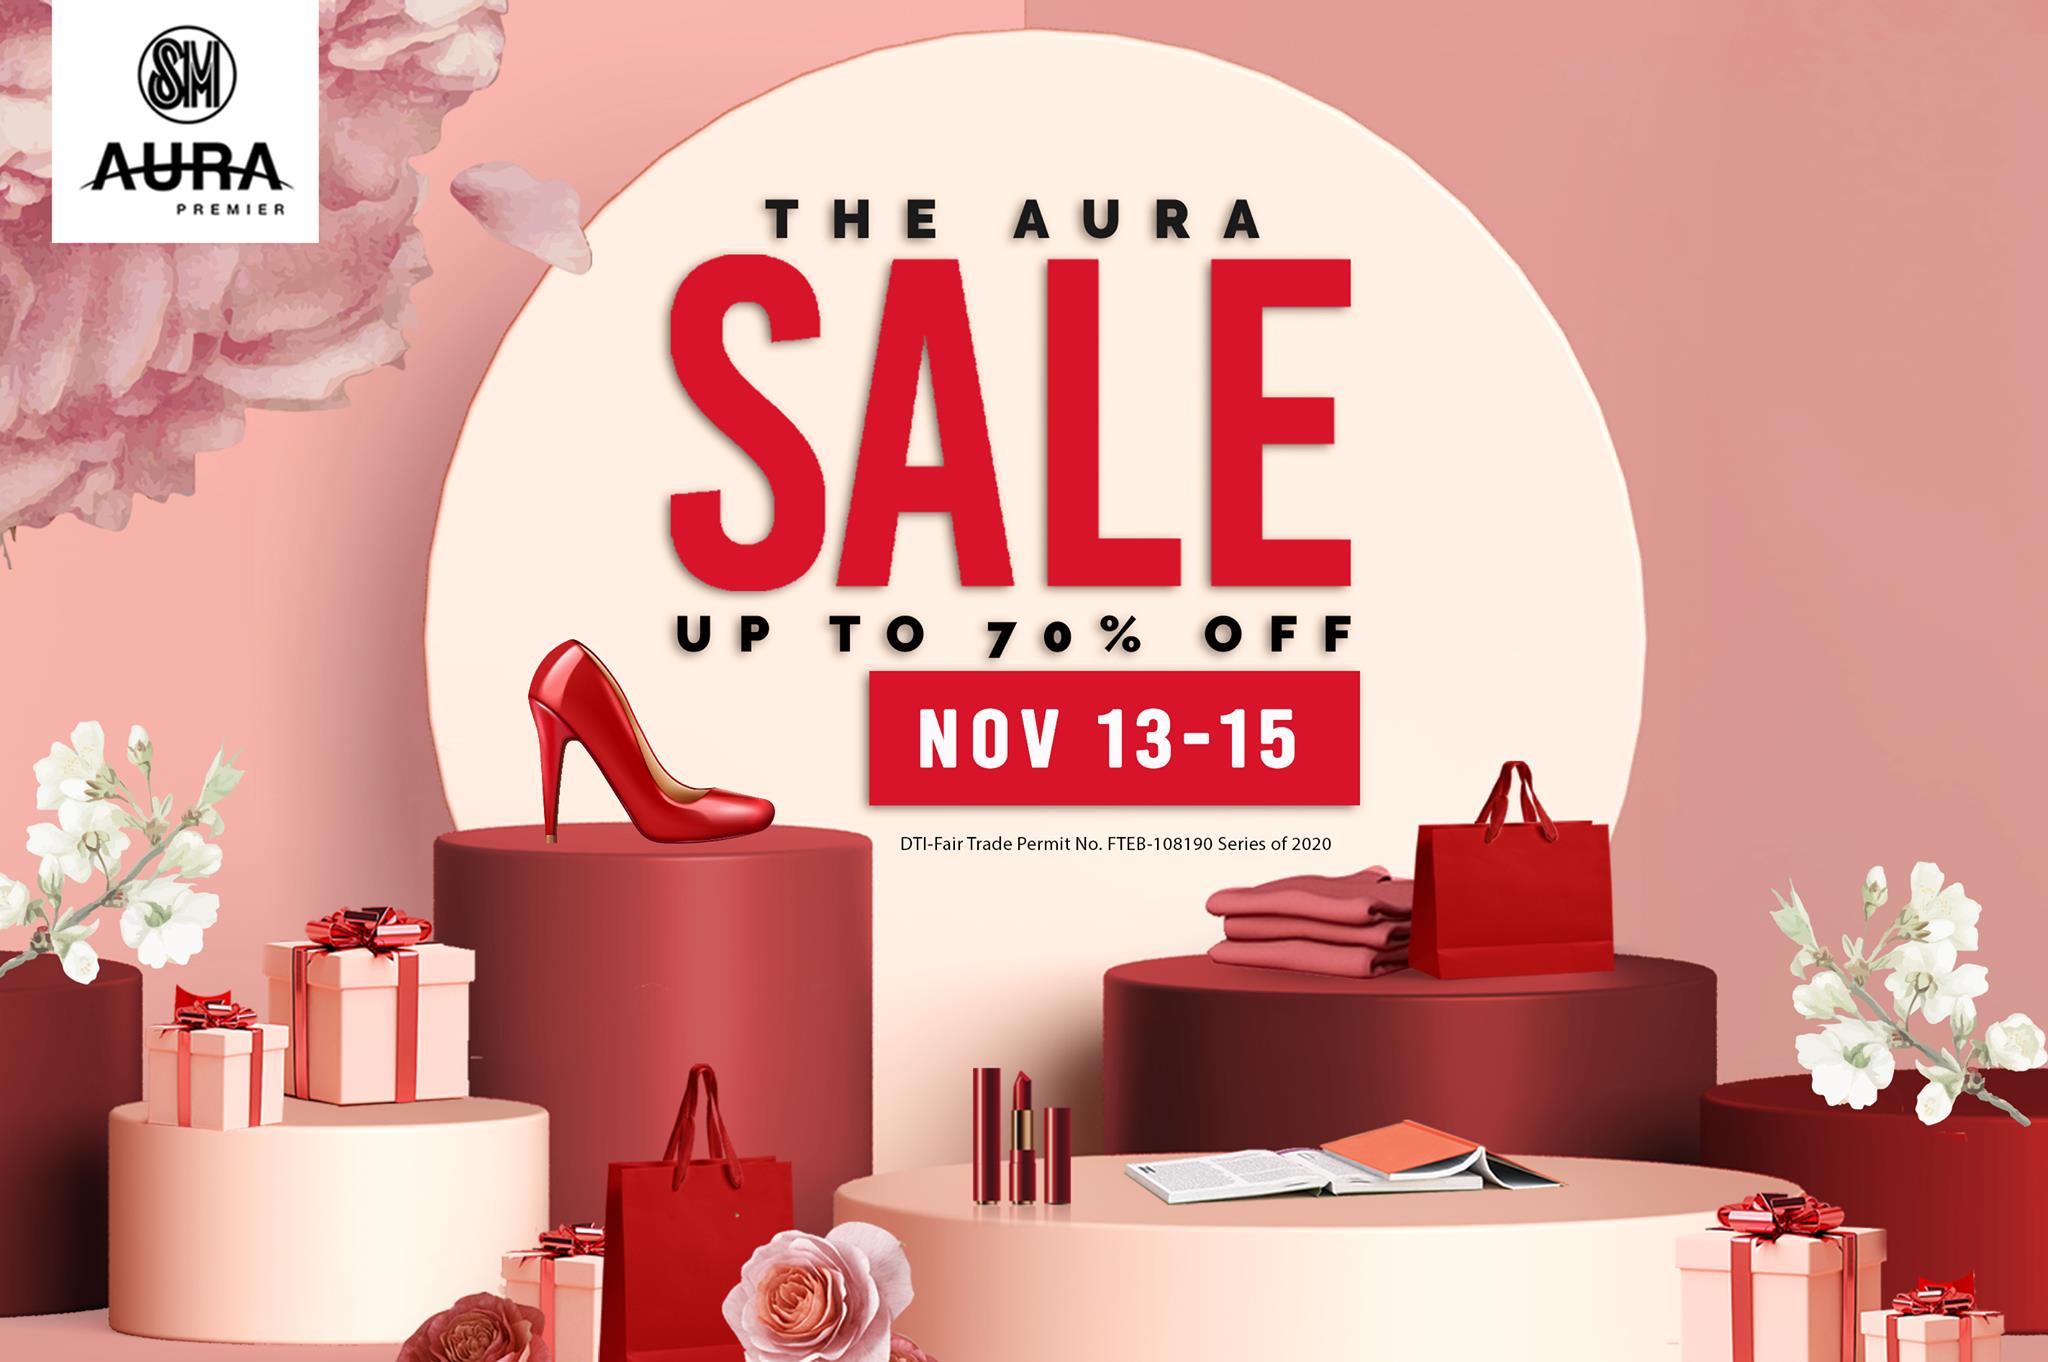 sm-aura-premier-the-aura-sale-up-to-70-off-deals-pinoy